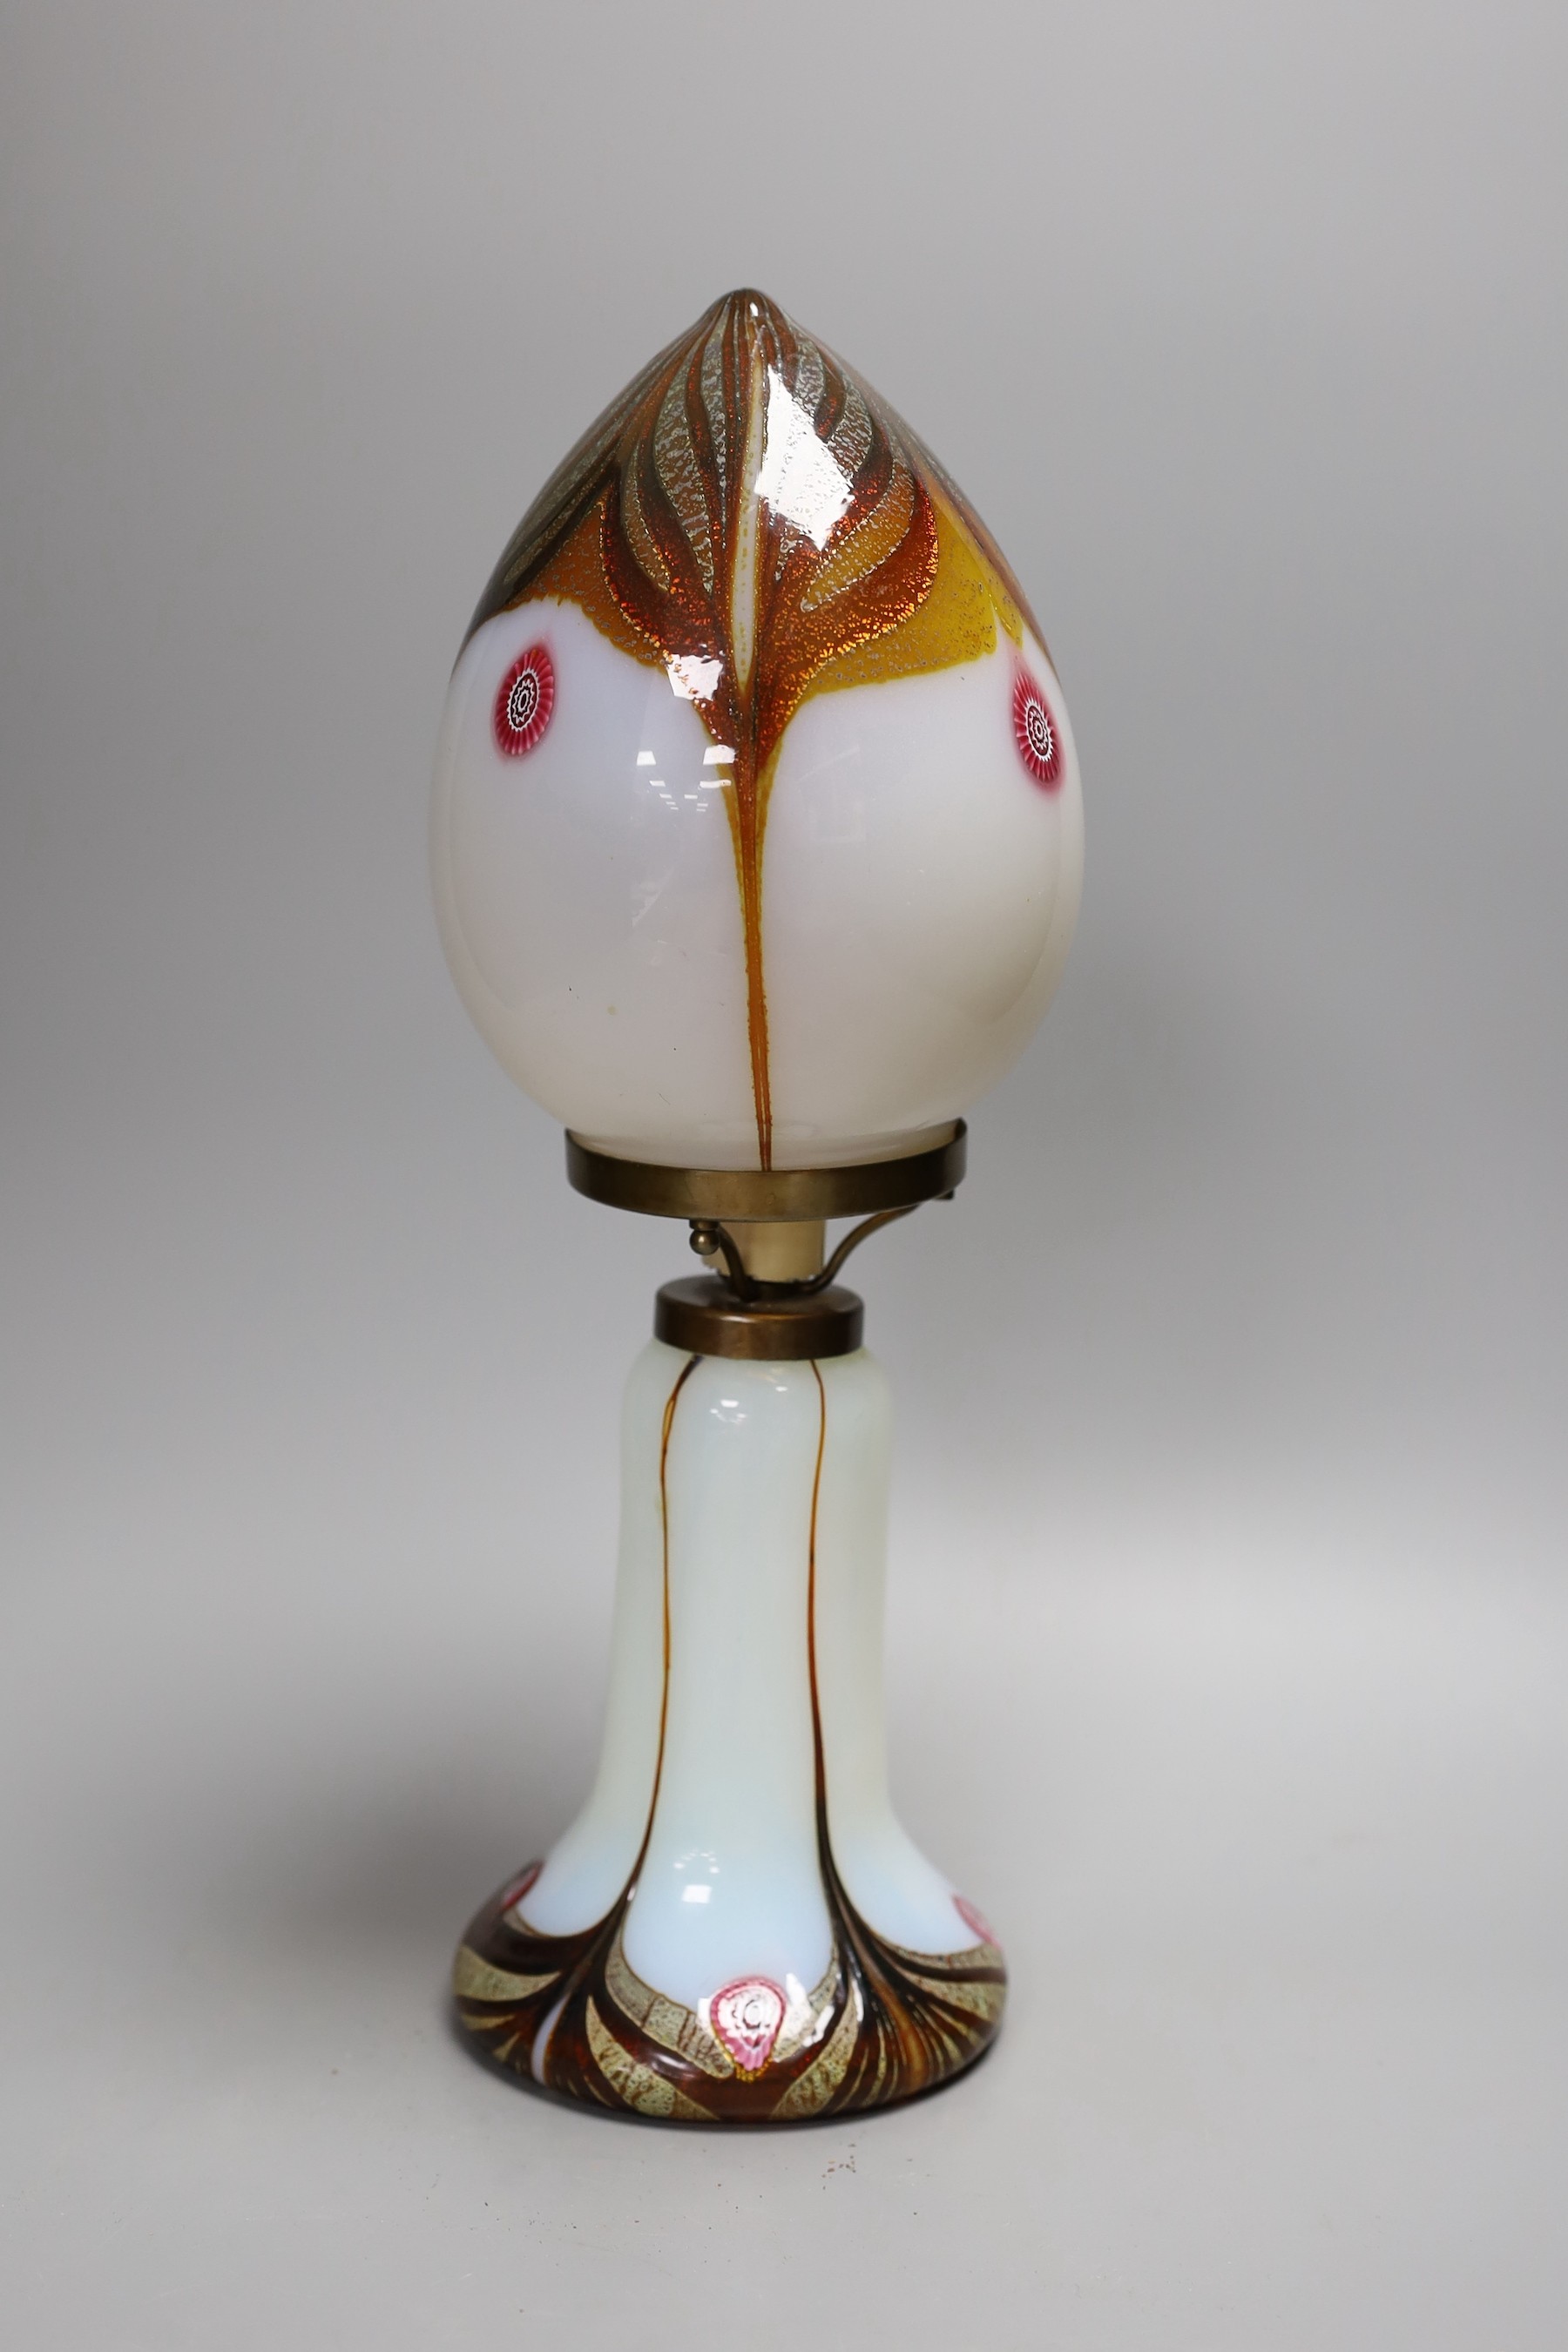 An Aldo Nason Murano glass lamp, 37cm tall